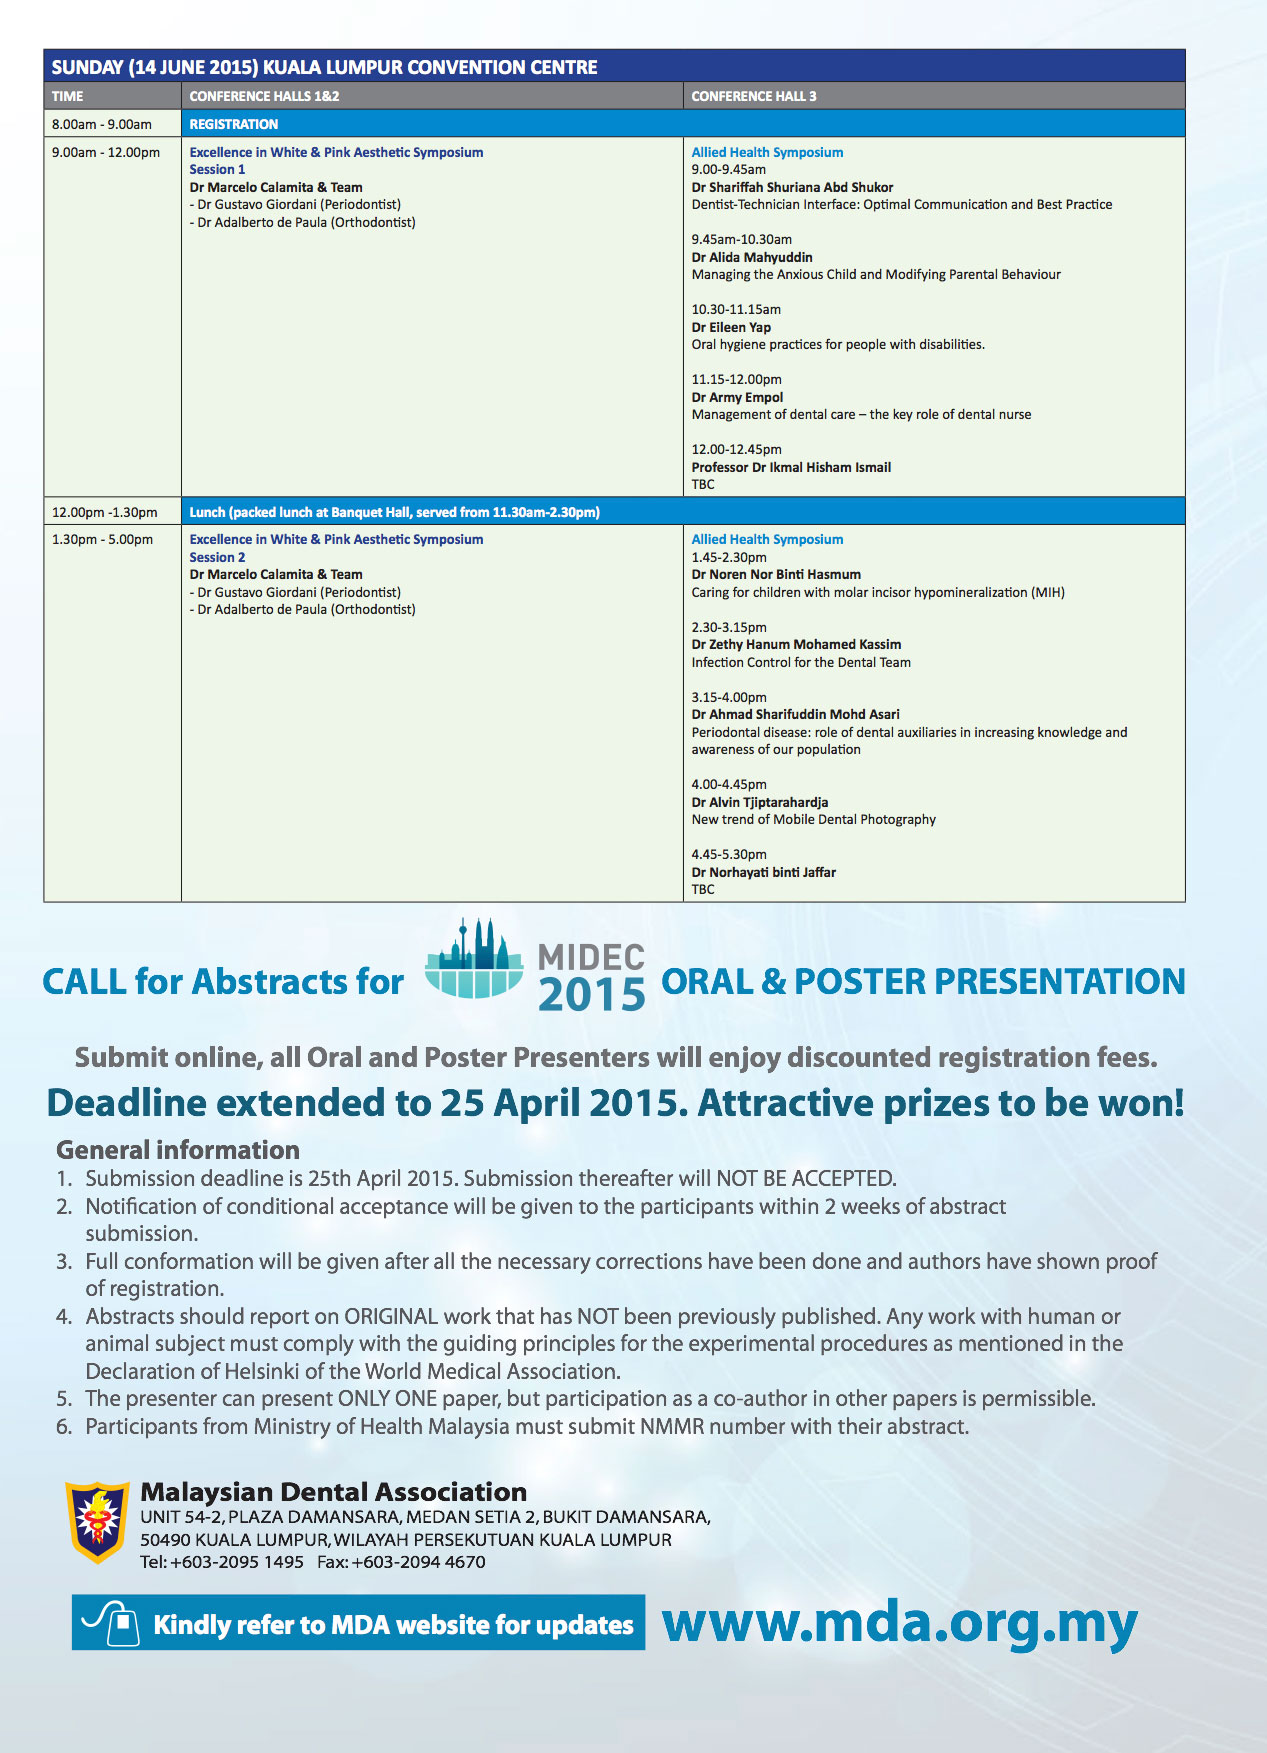 MIDEC-2015-MDA-Conference-2